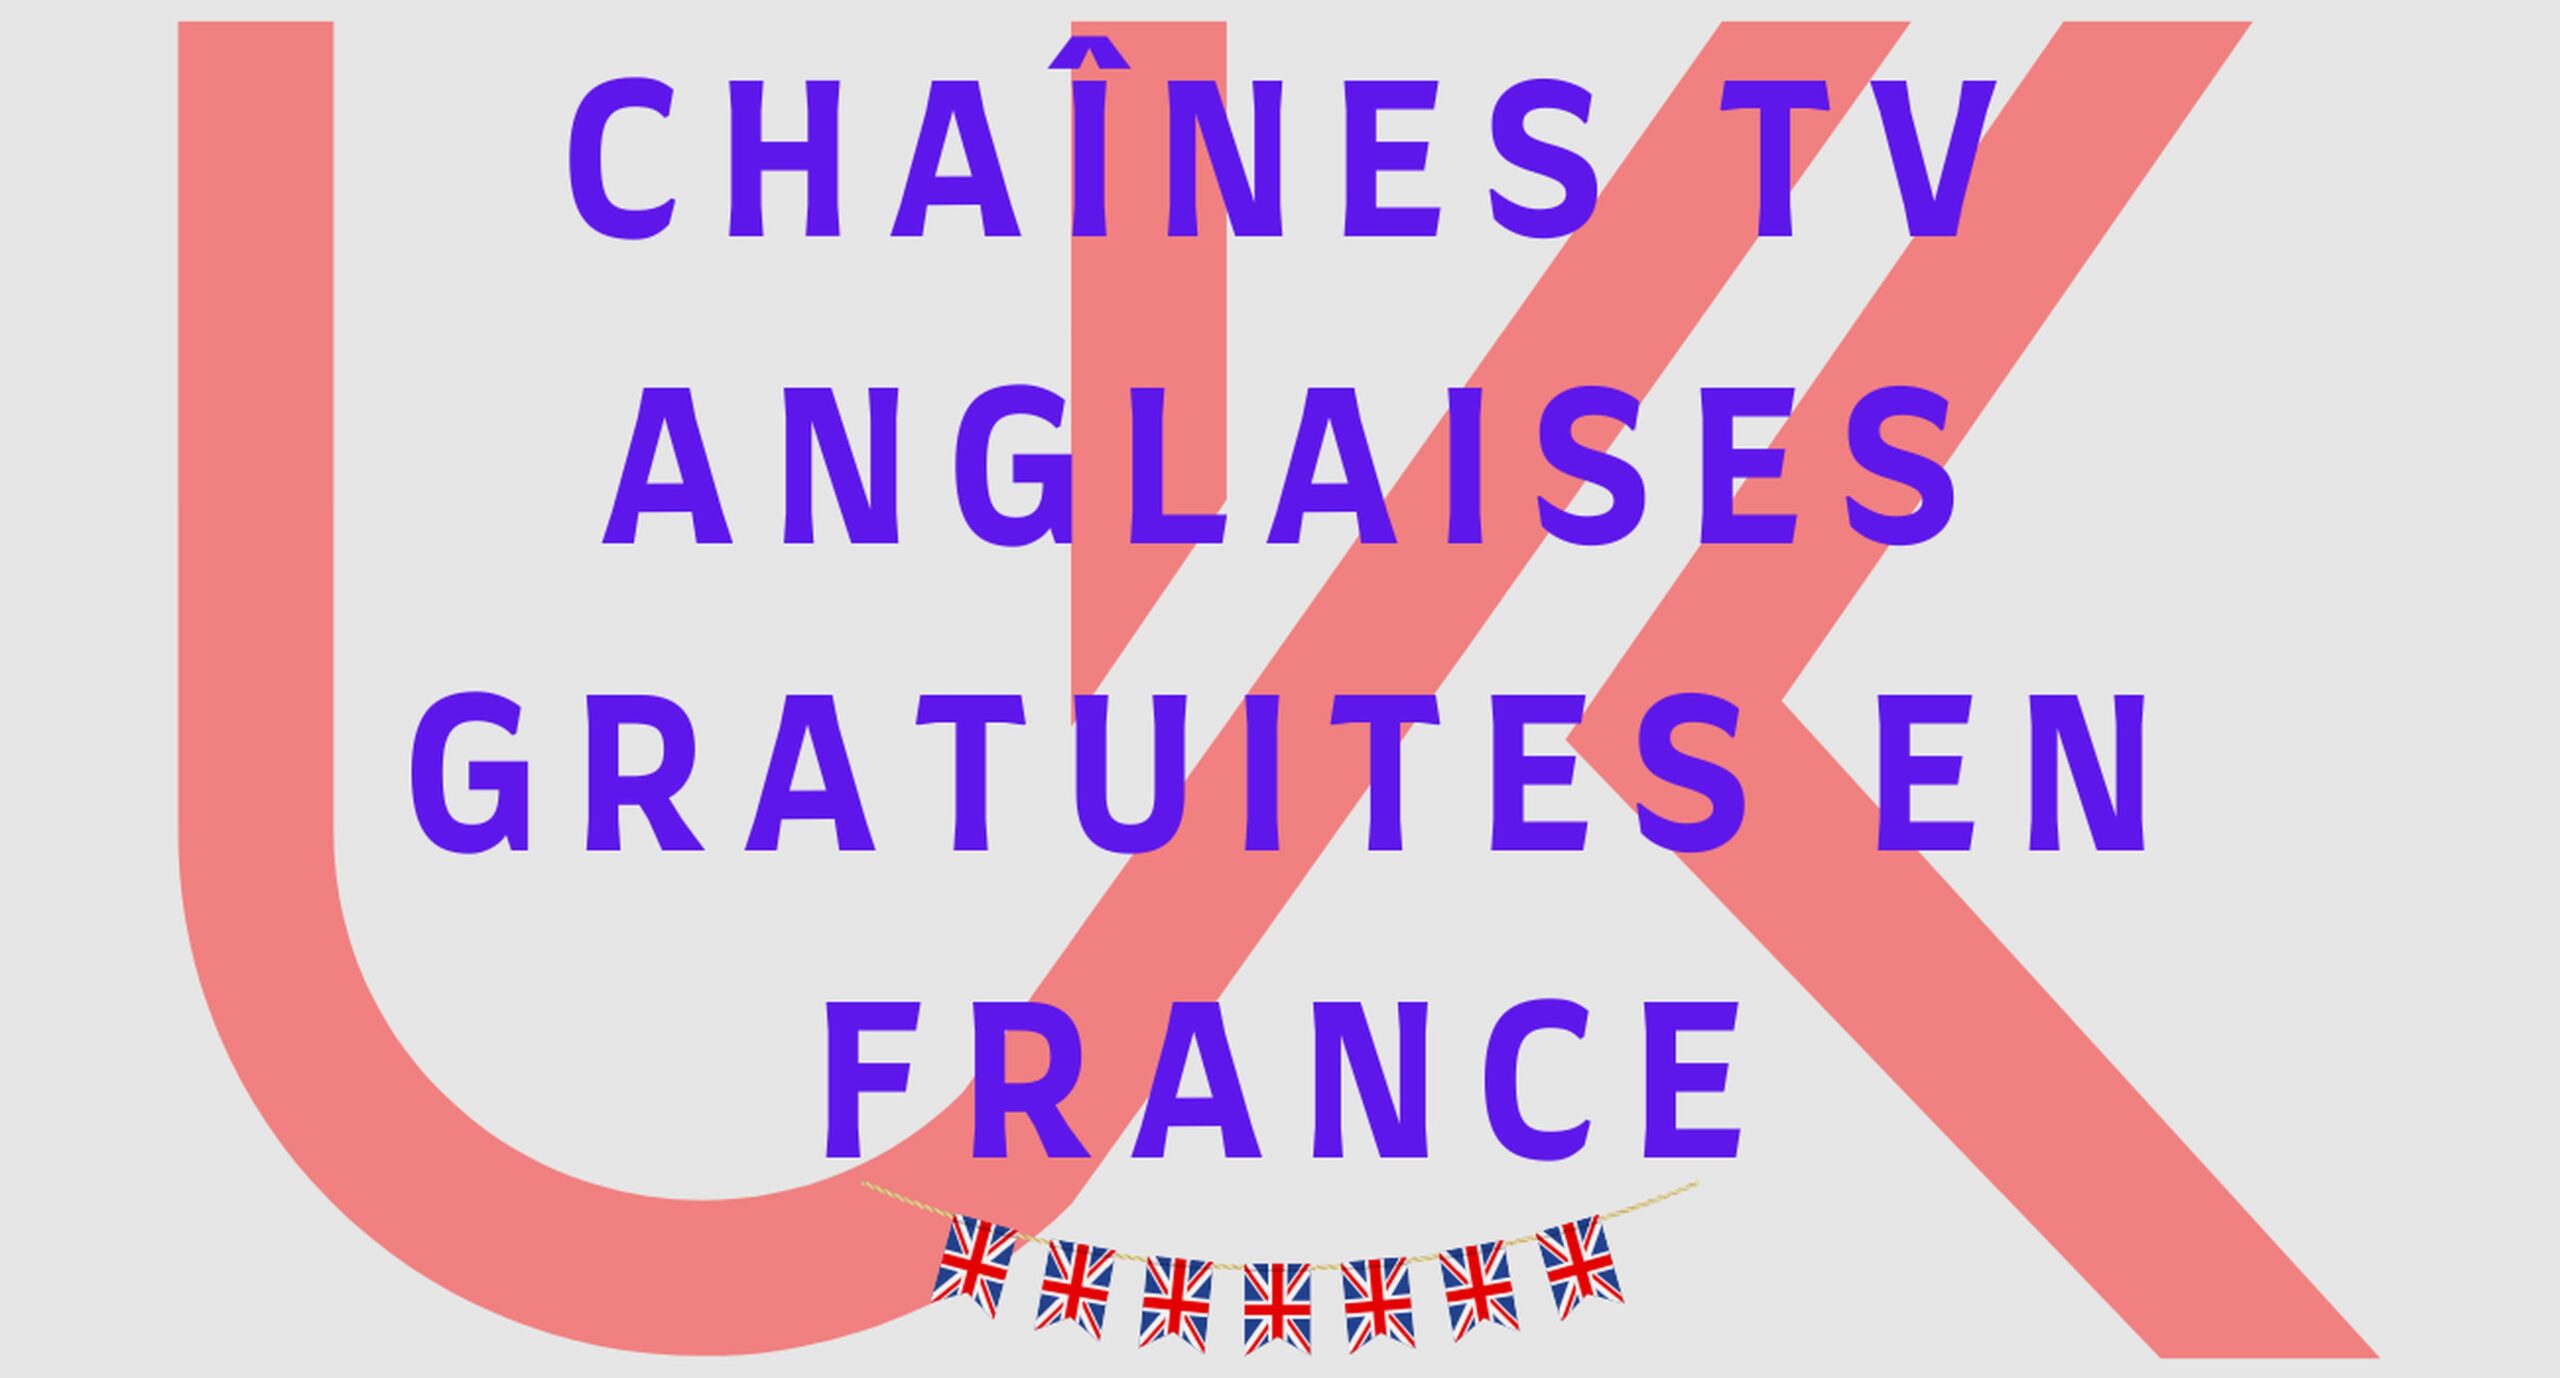 Chaînes TV Anglaises gratuites en France - 55 Chaînes TV disponibles 13